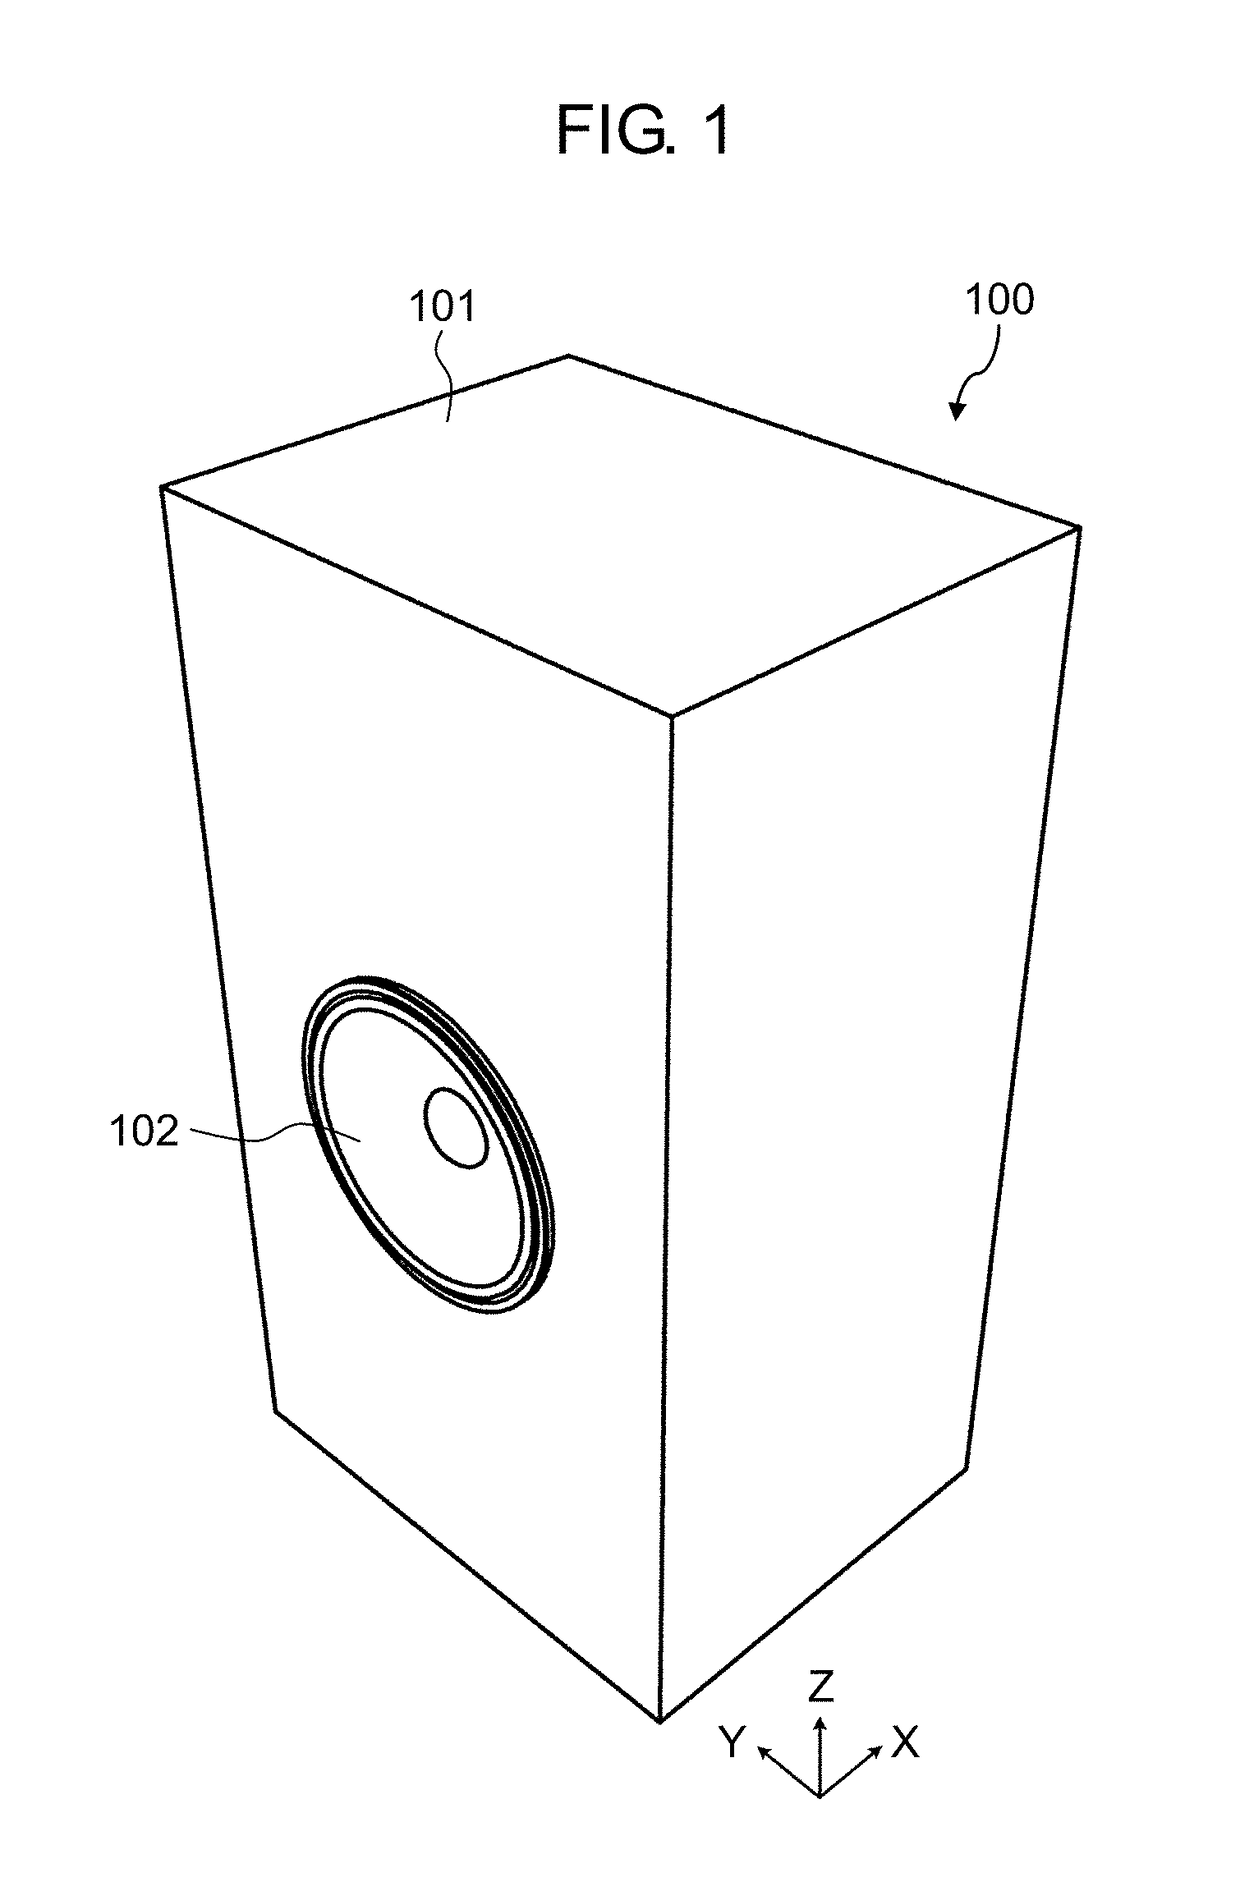 Speaker device